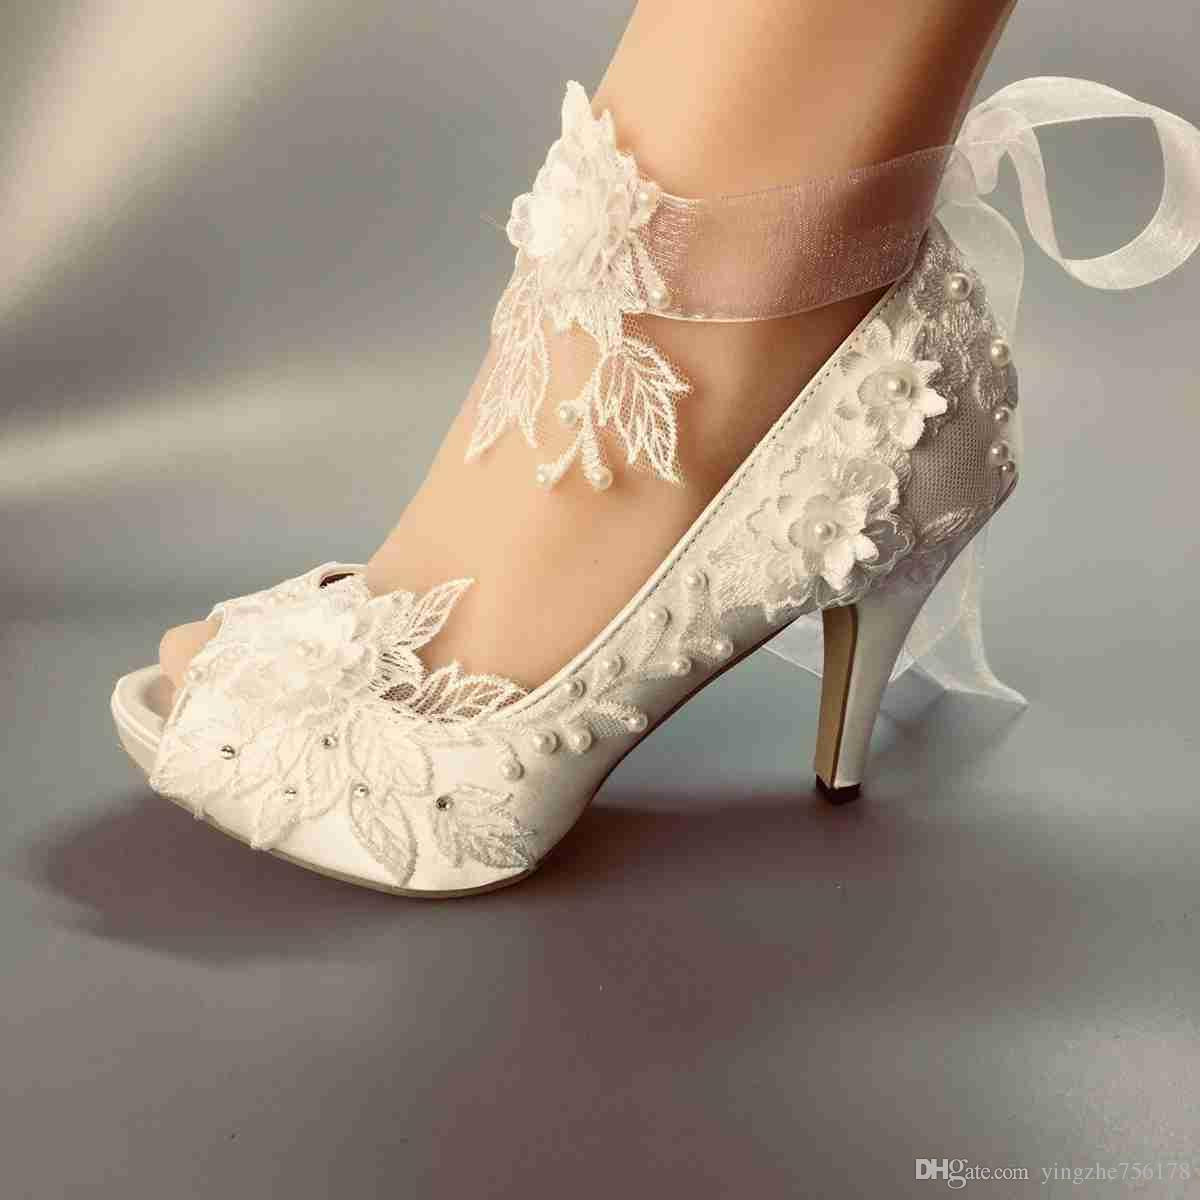 Ivory Shoes For Wedding
 Wedding Shoes Waterproof White Ivory Bride Wedding Dresses